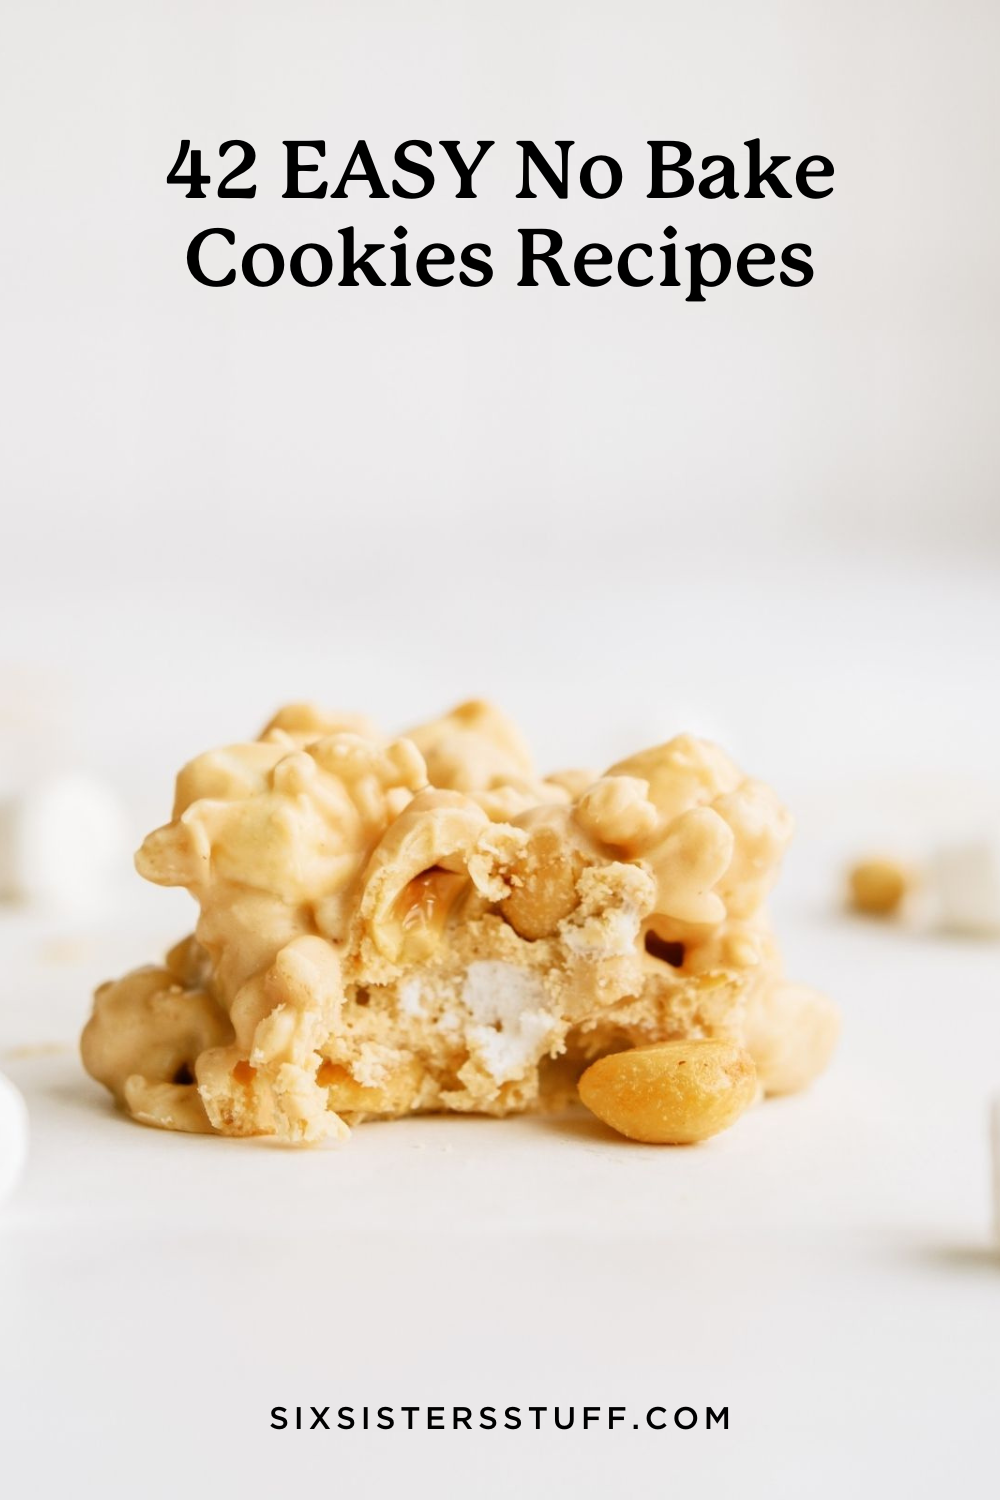 42 EASY No Bake Cookies Recipes